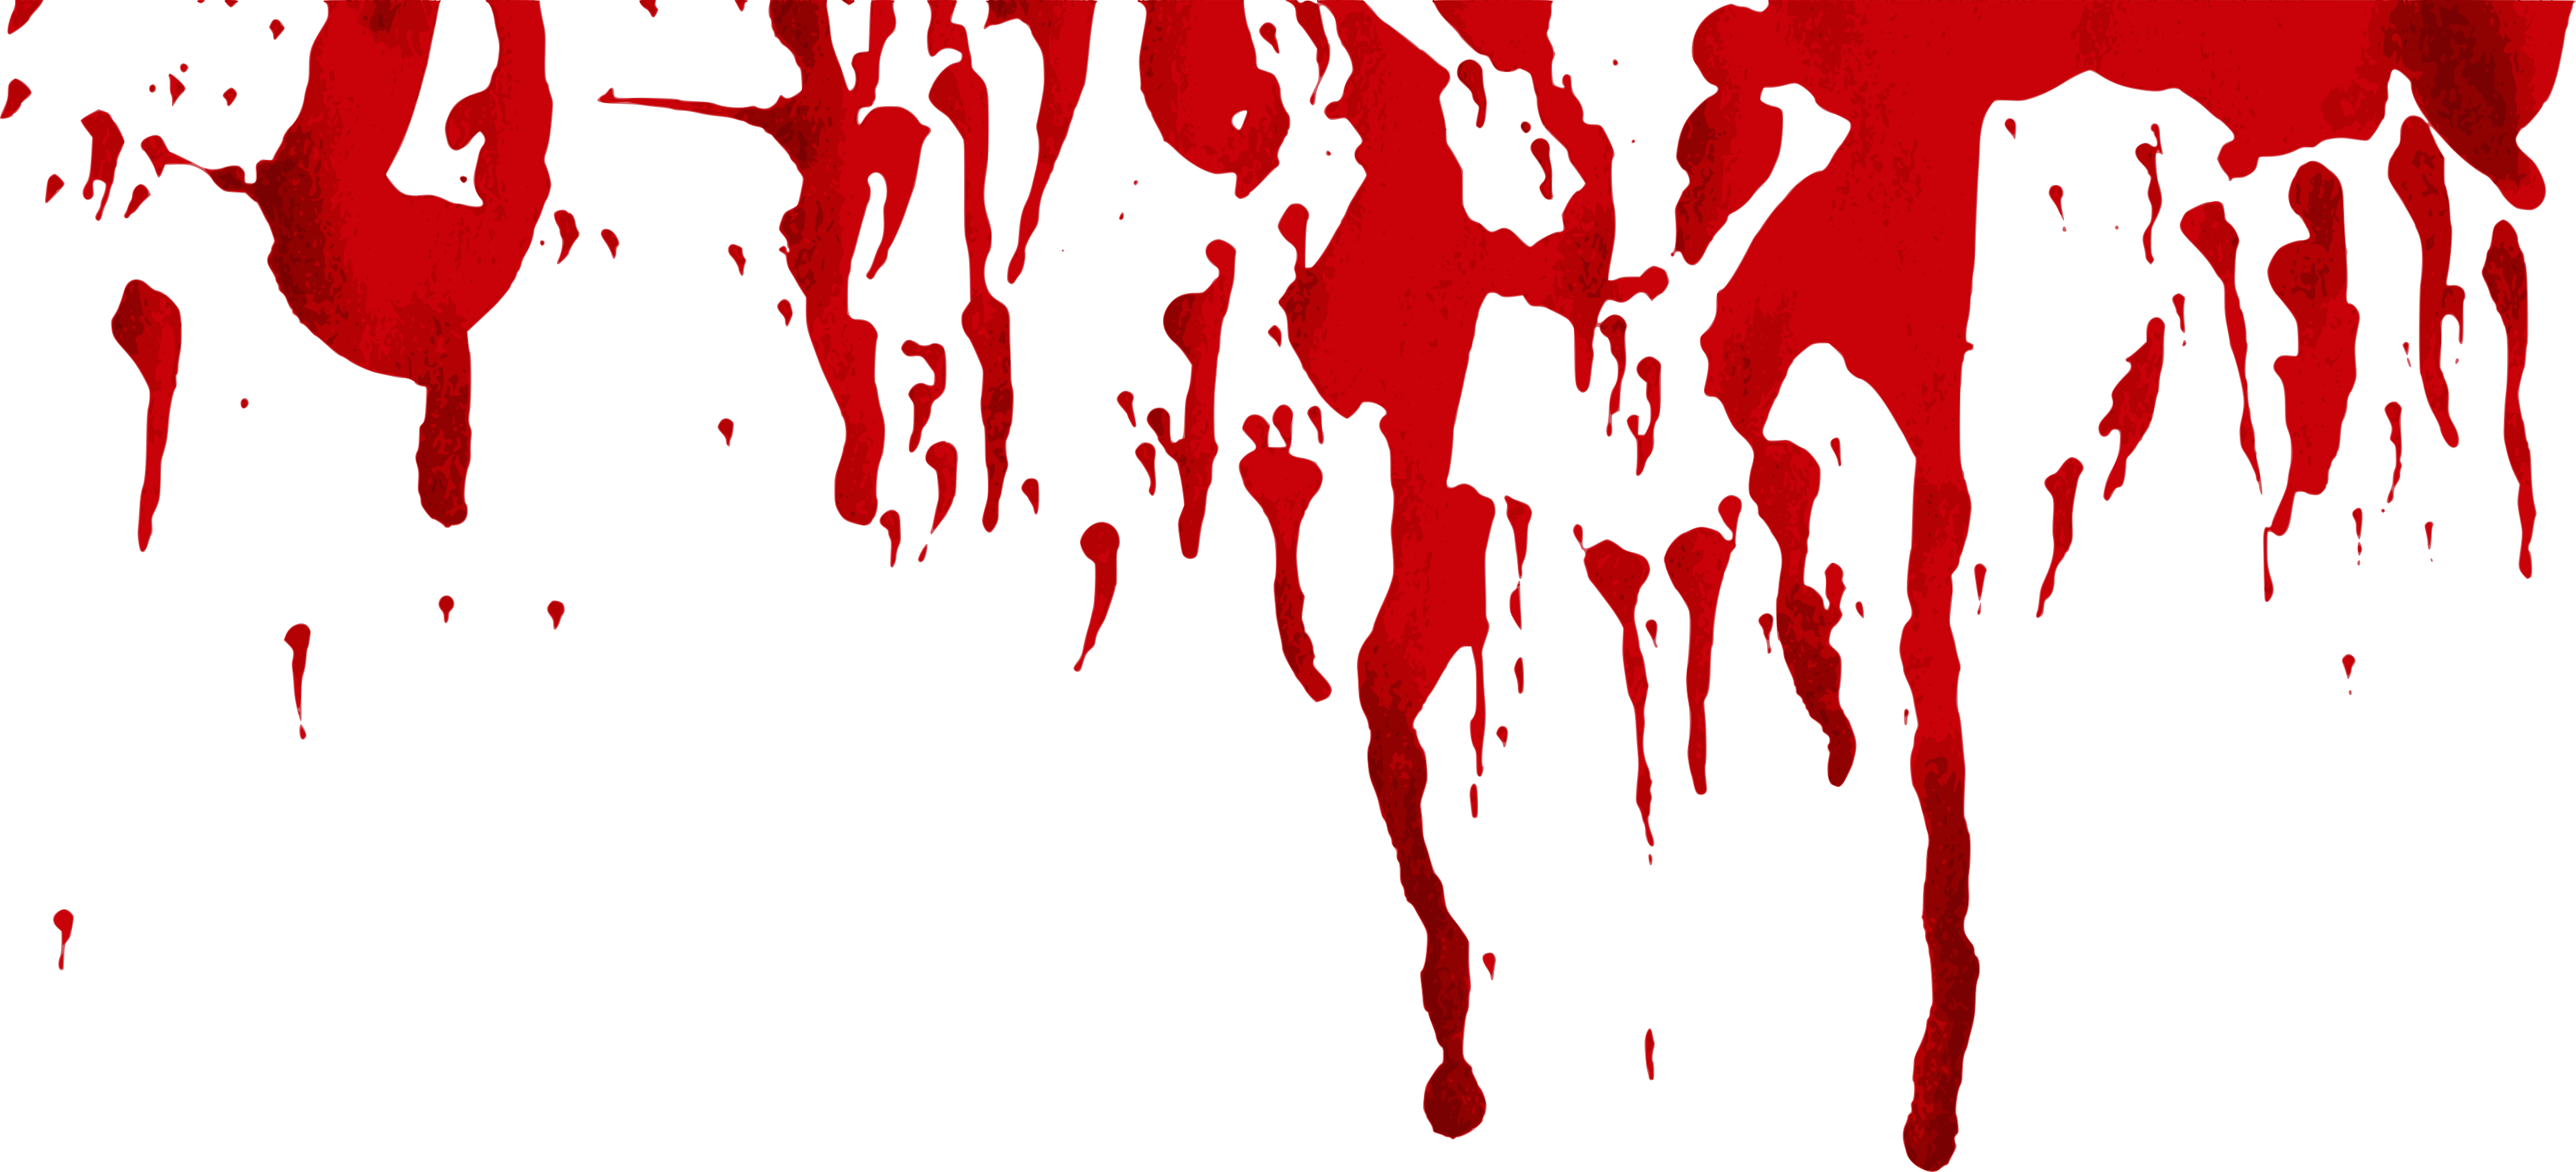 Blood Splatter PNG Free Image